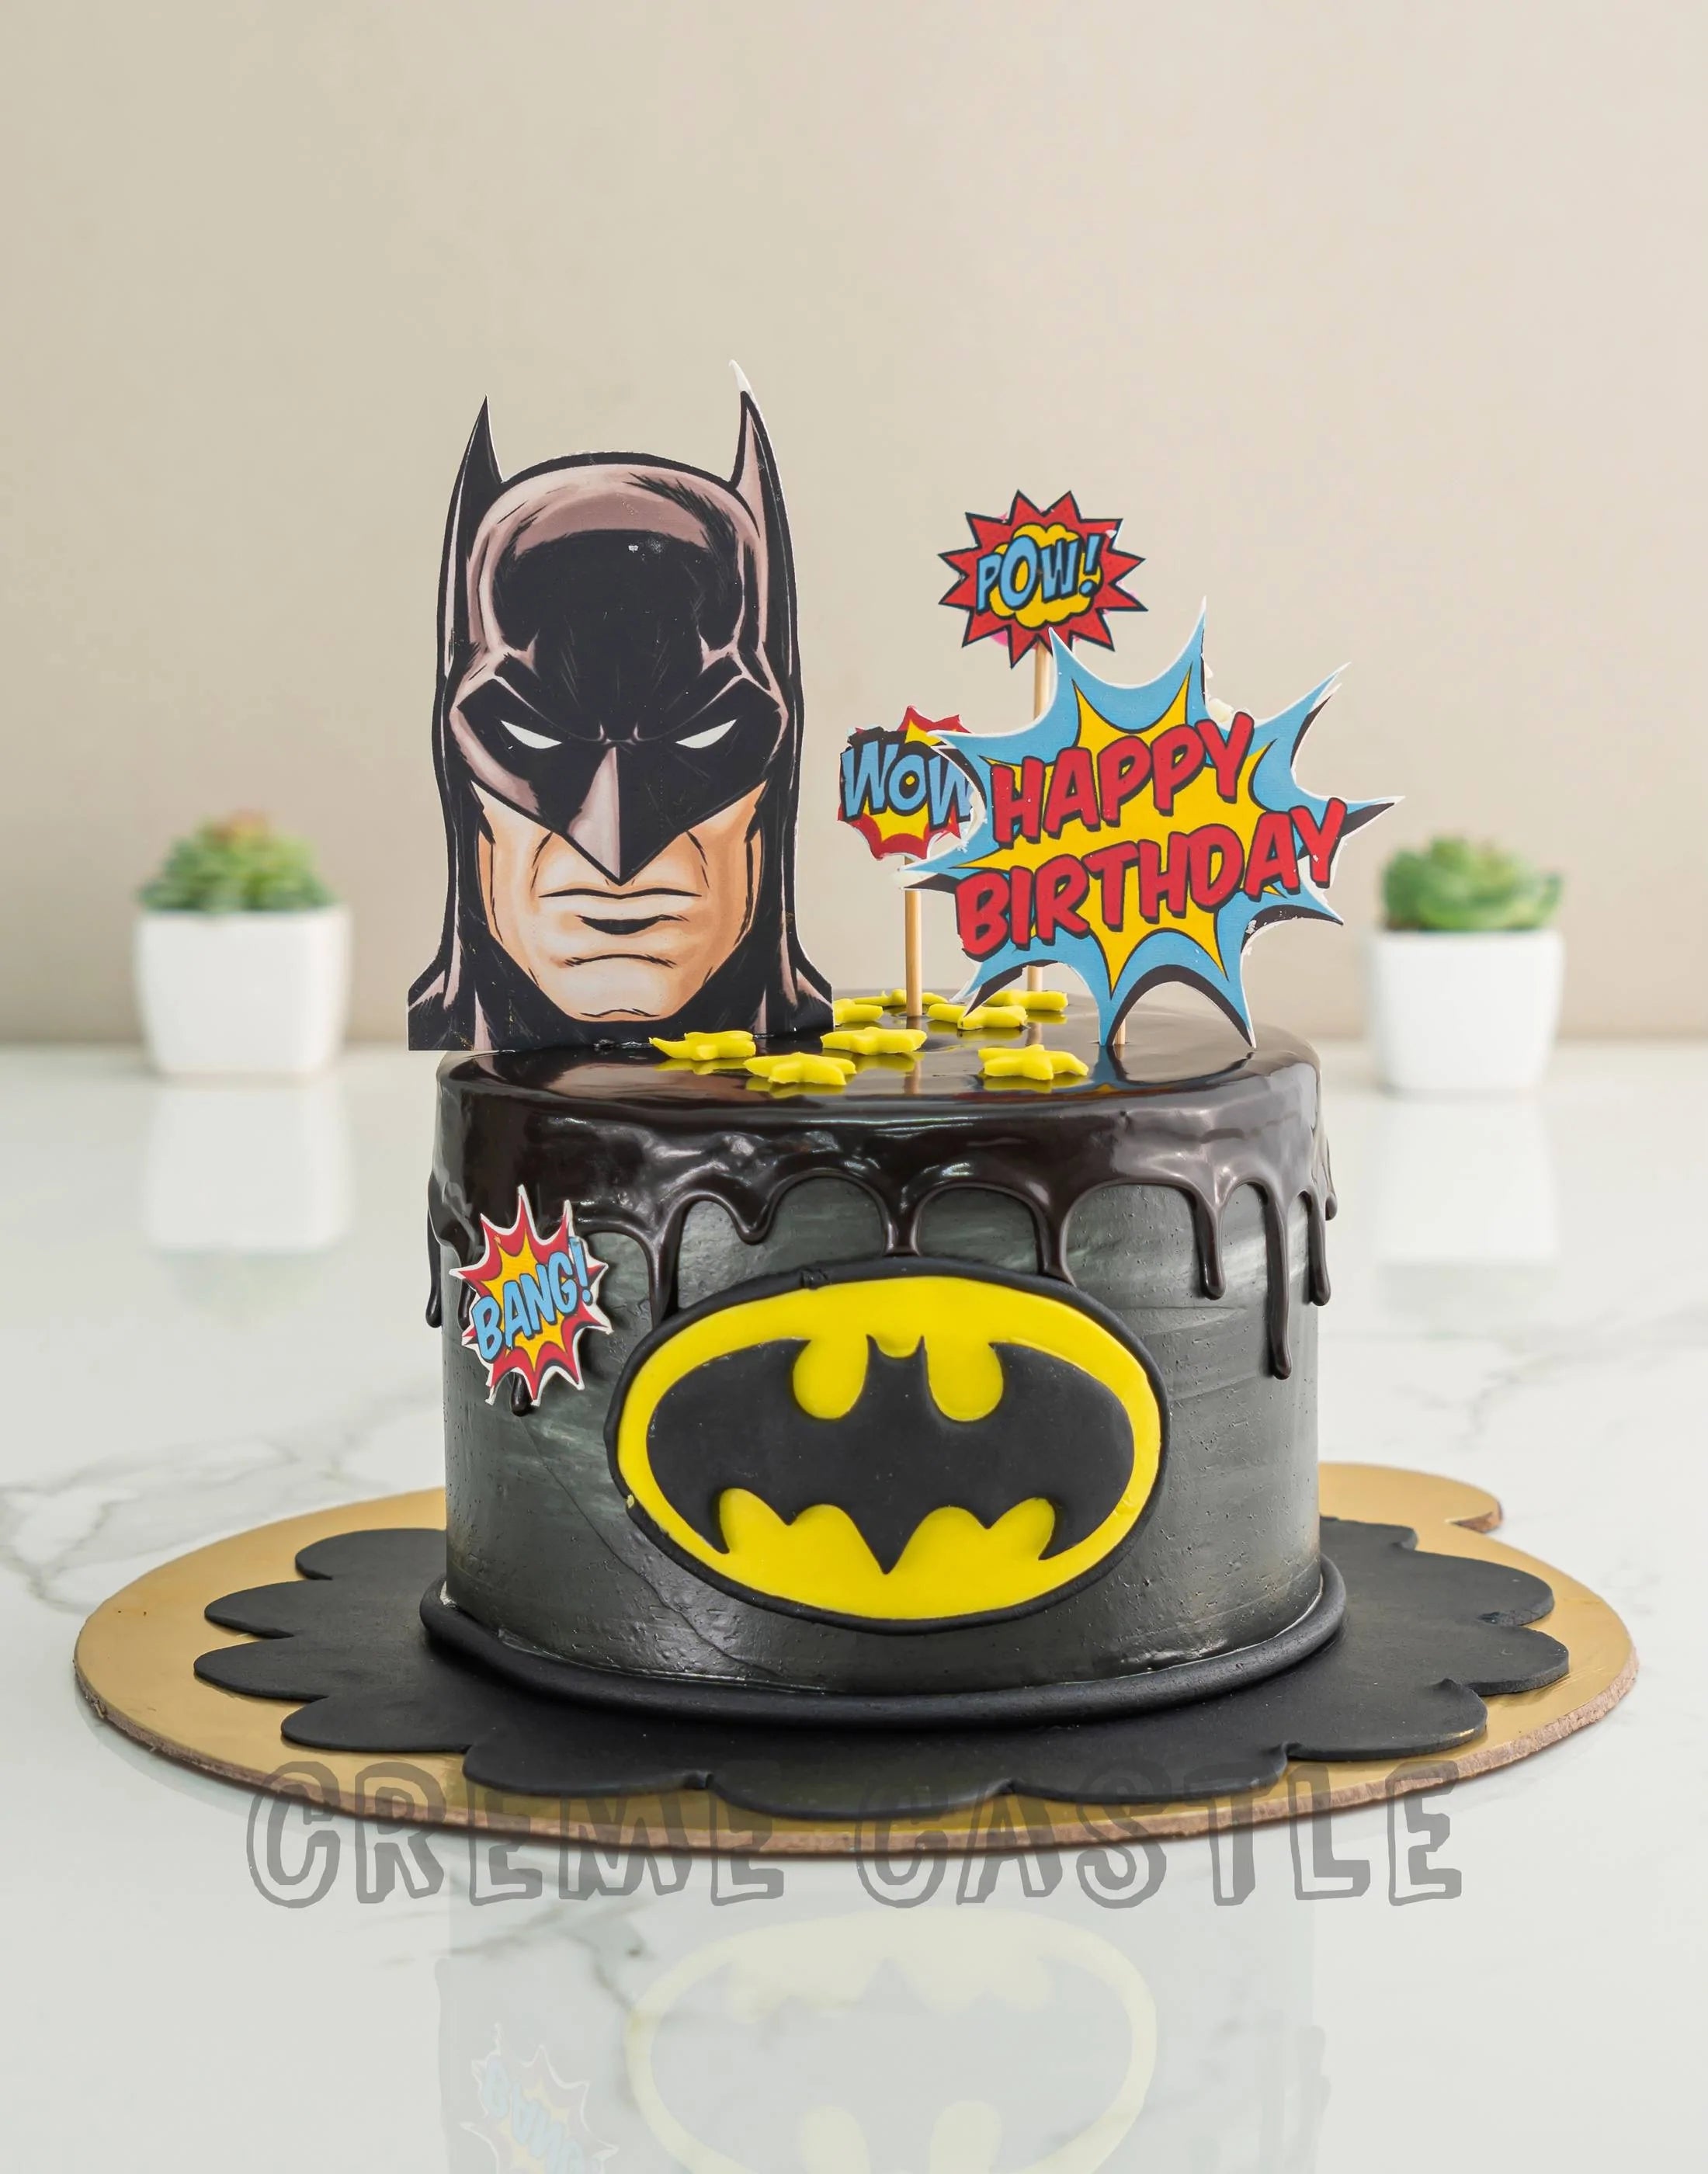 Super Hero Theme Based Cakes Ideas